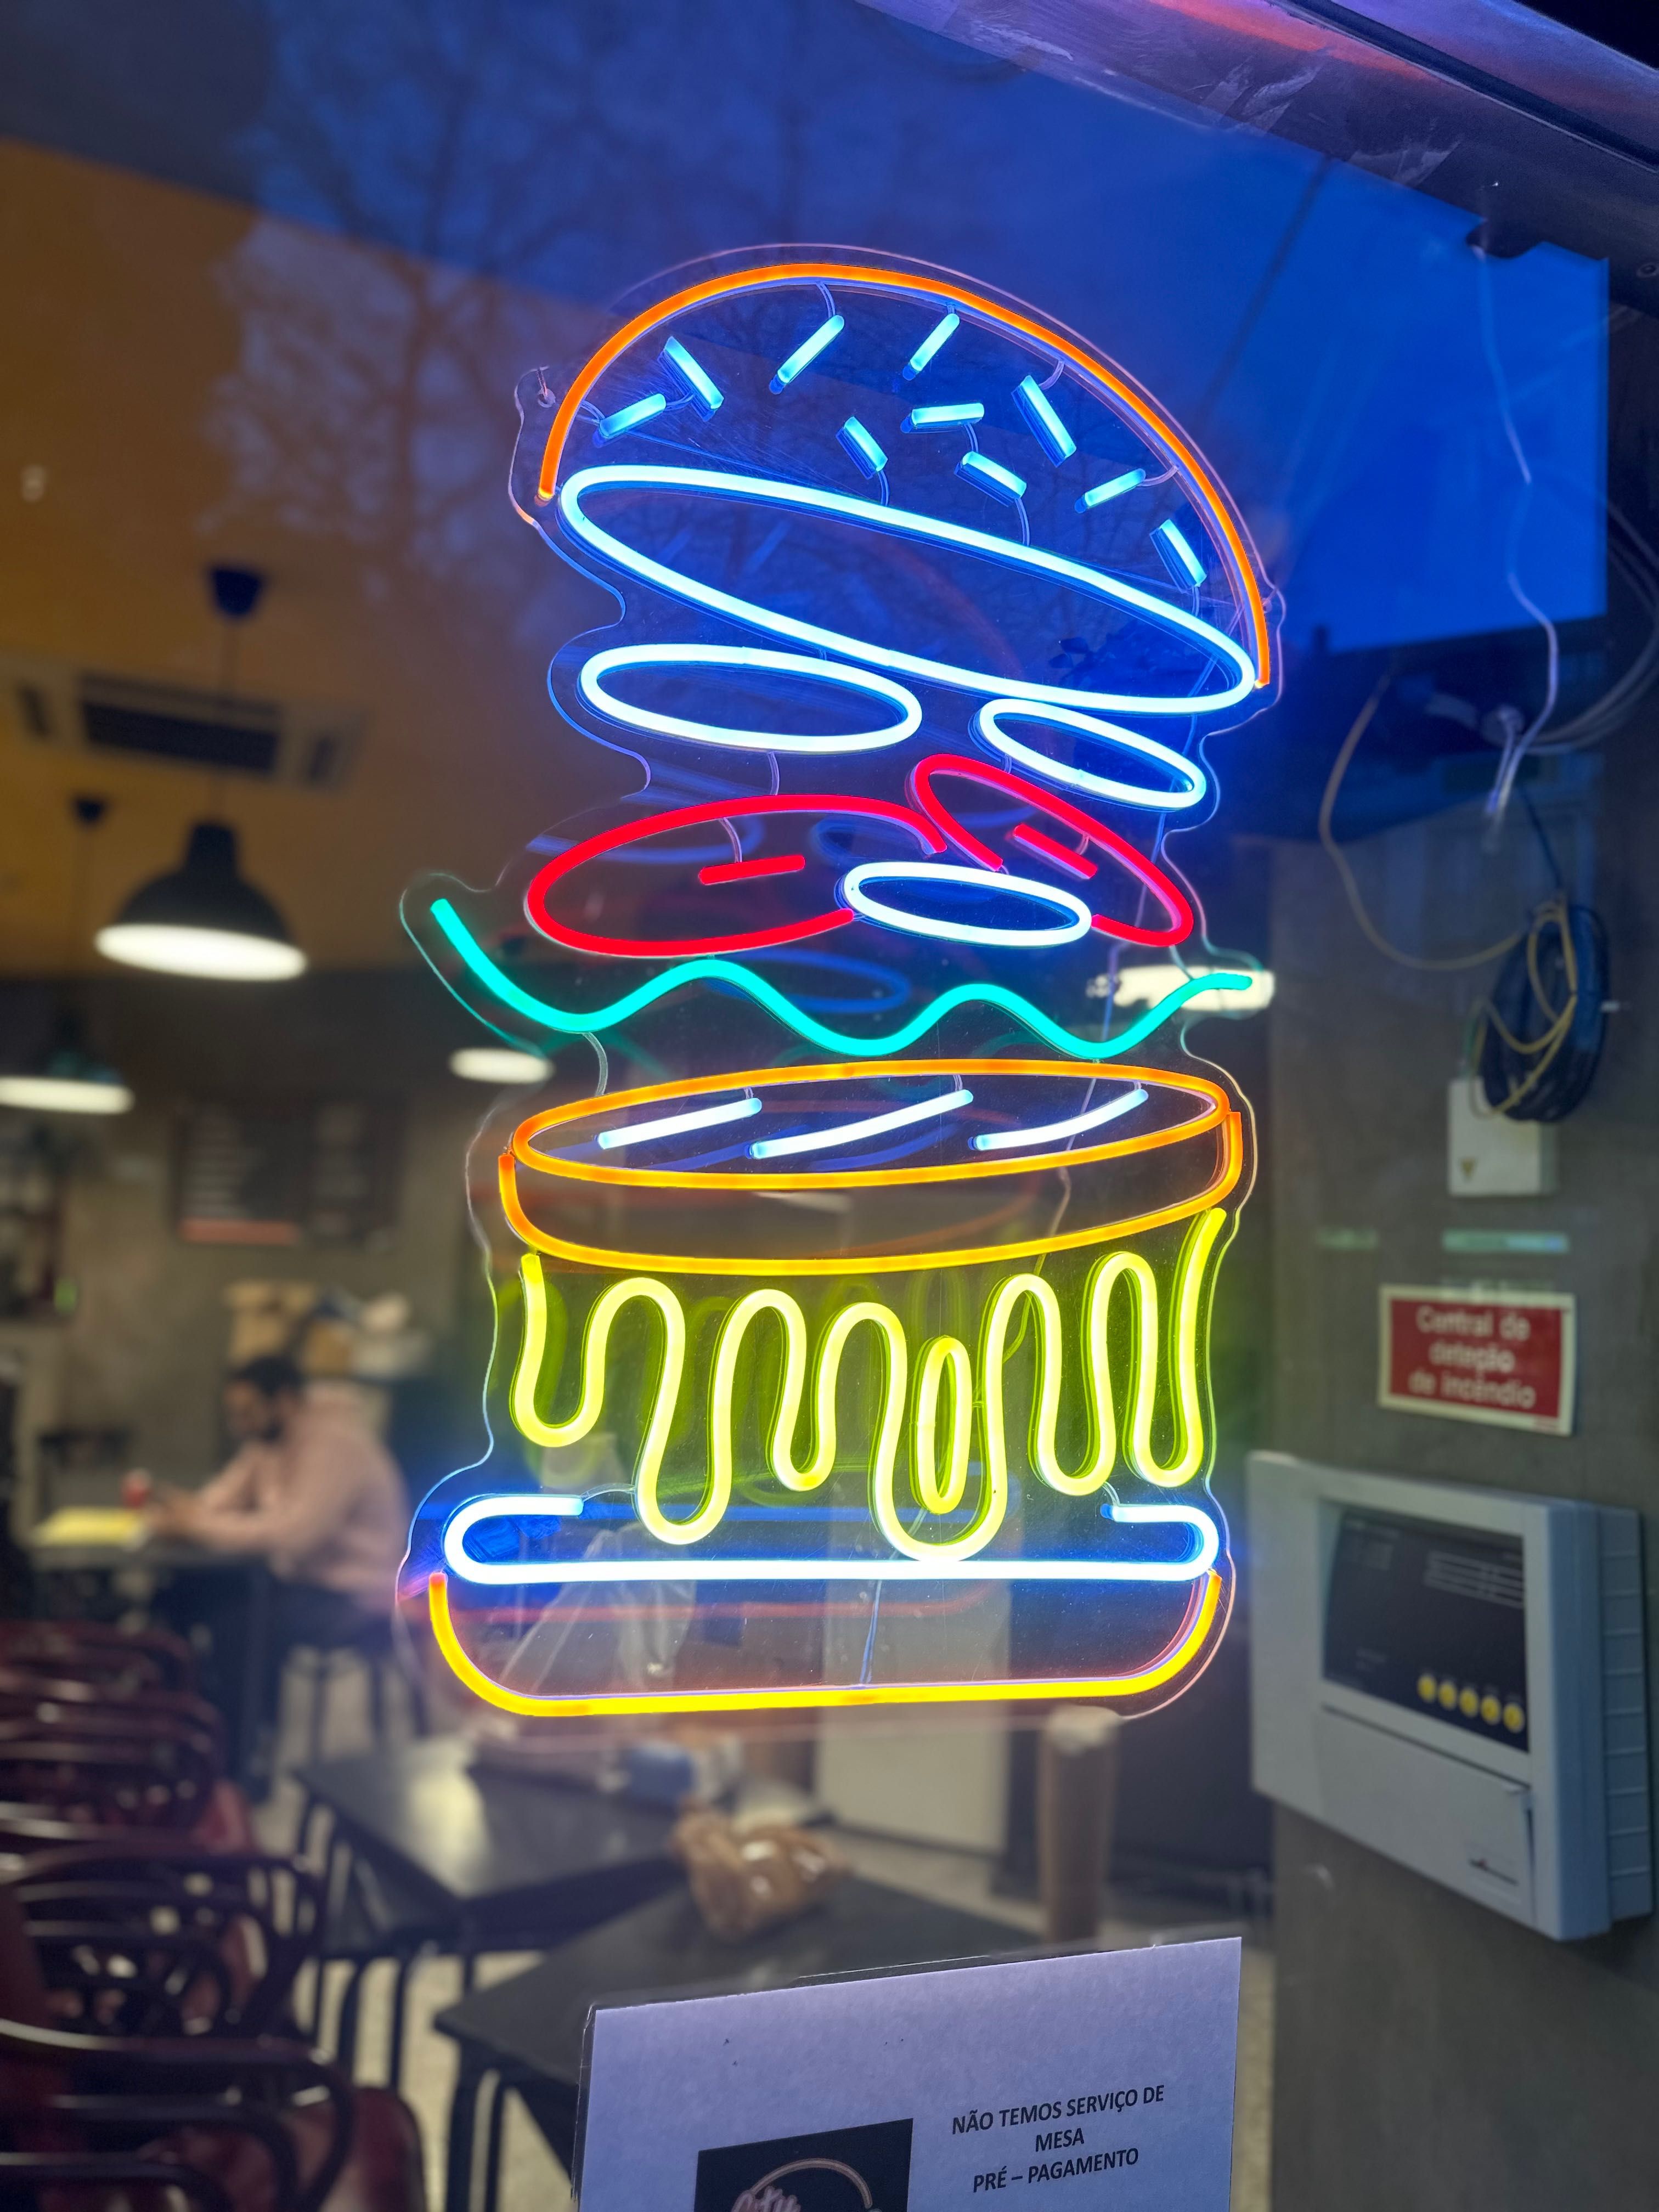 Neon “hamburger” sign